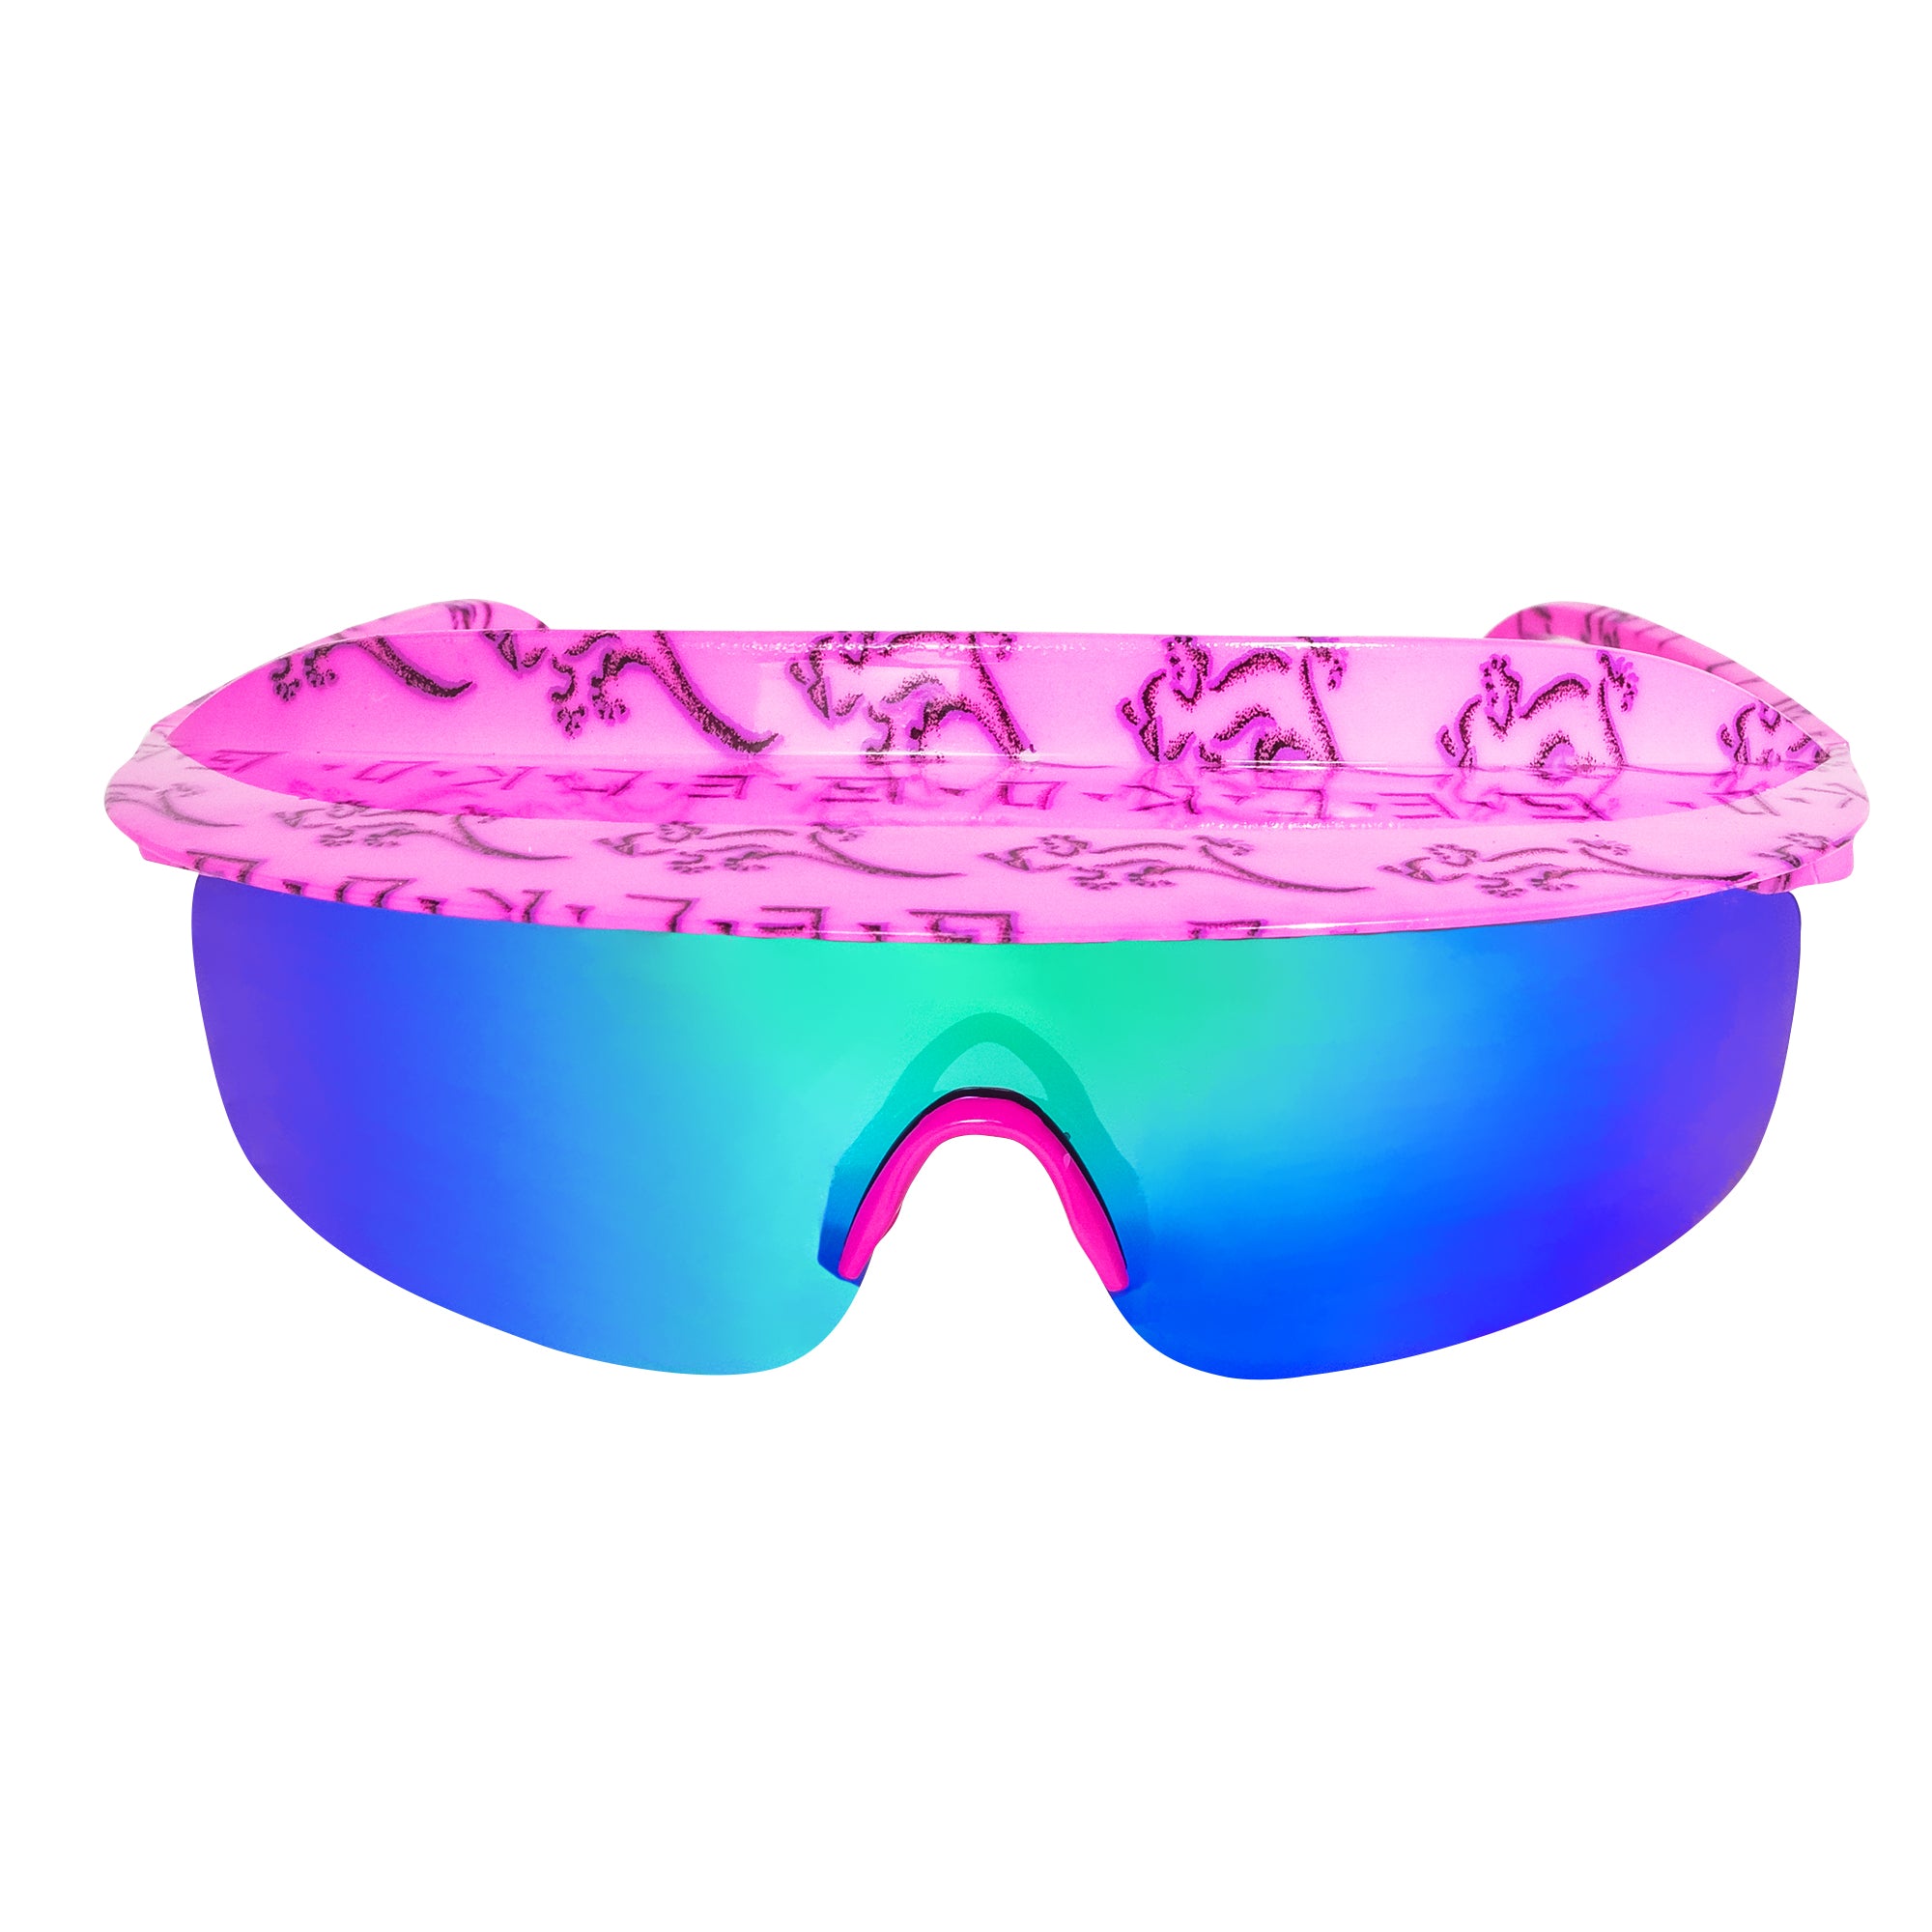 Pink Petro Gecko Hawaii 80s retro Vintage visor shades sunglasses. Polarized UV 400 gecko Hawaii clothing 90s pink with blue lens visor shade sunglasses from the boats to the slopes. B Fresh Gear